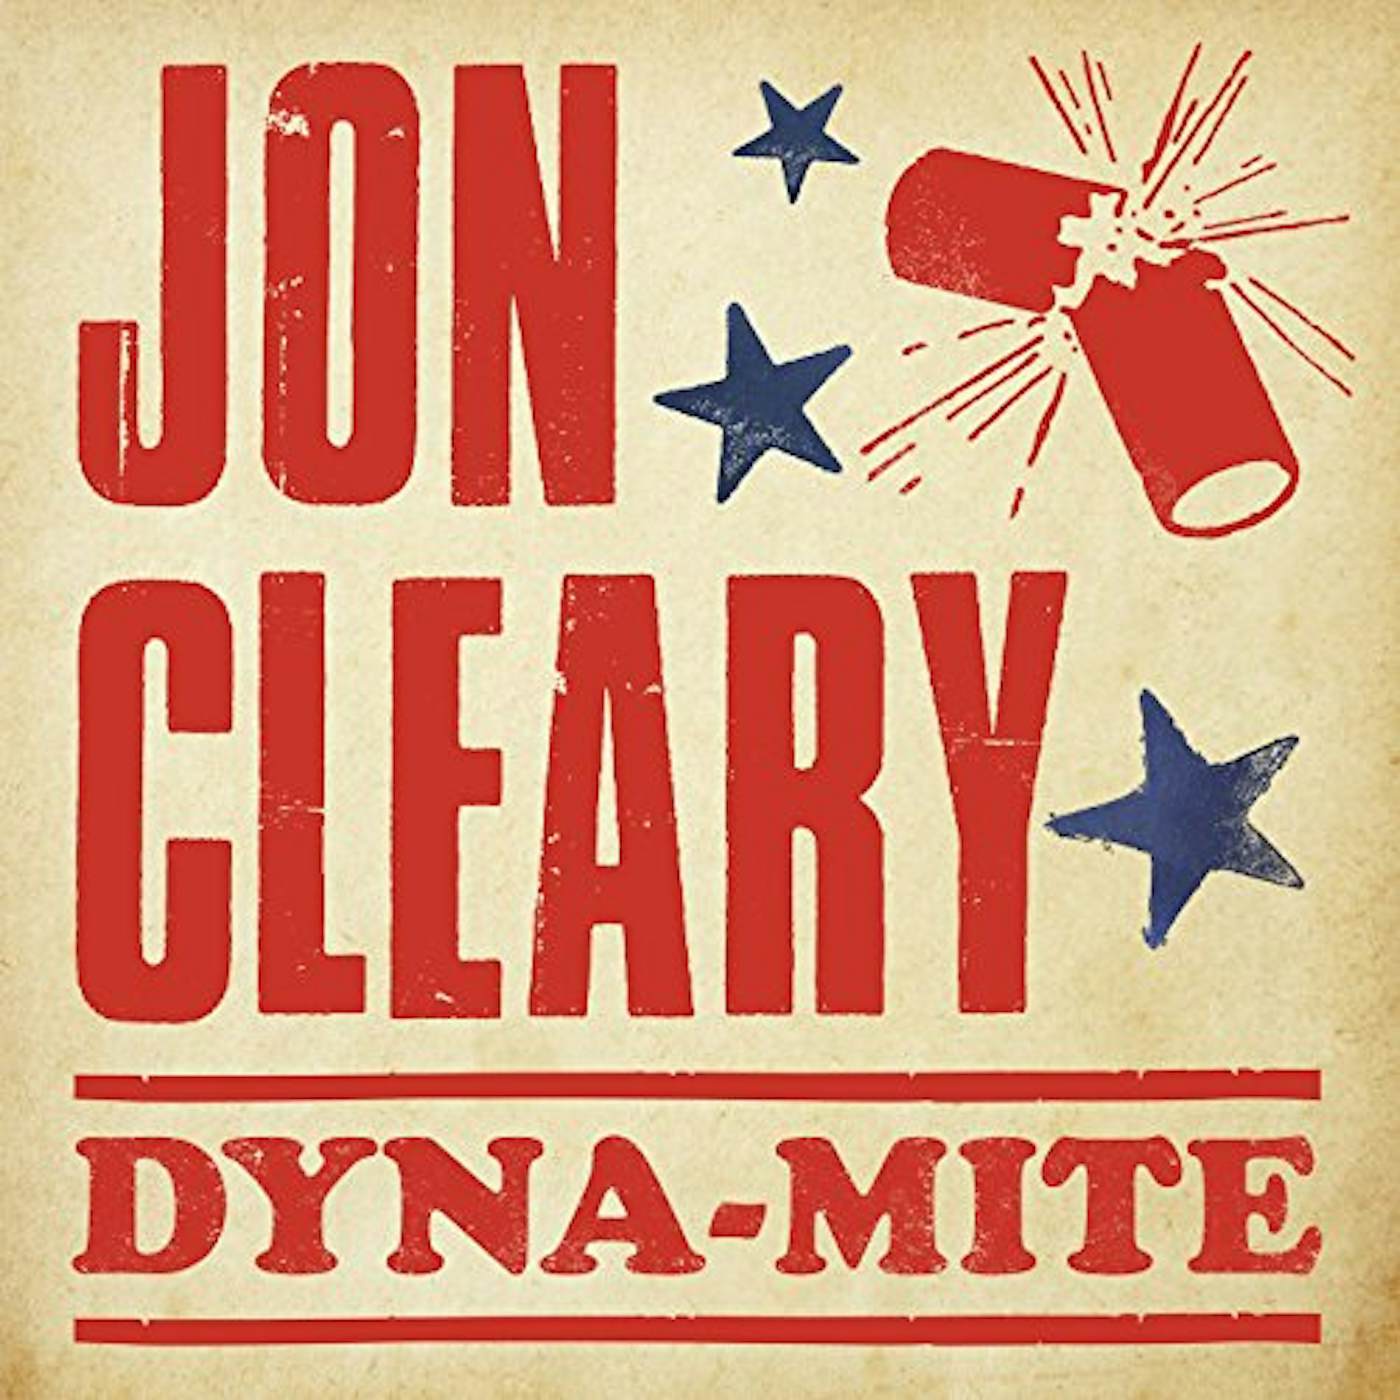 Jon Cleary Dyna-Mite Vinyl Record